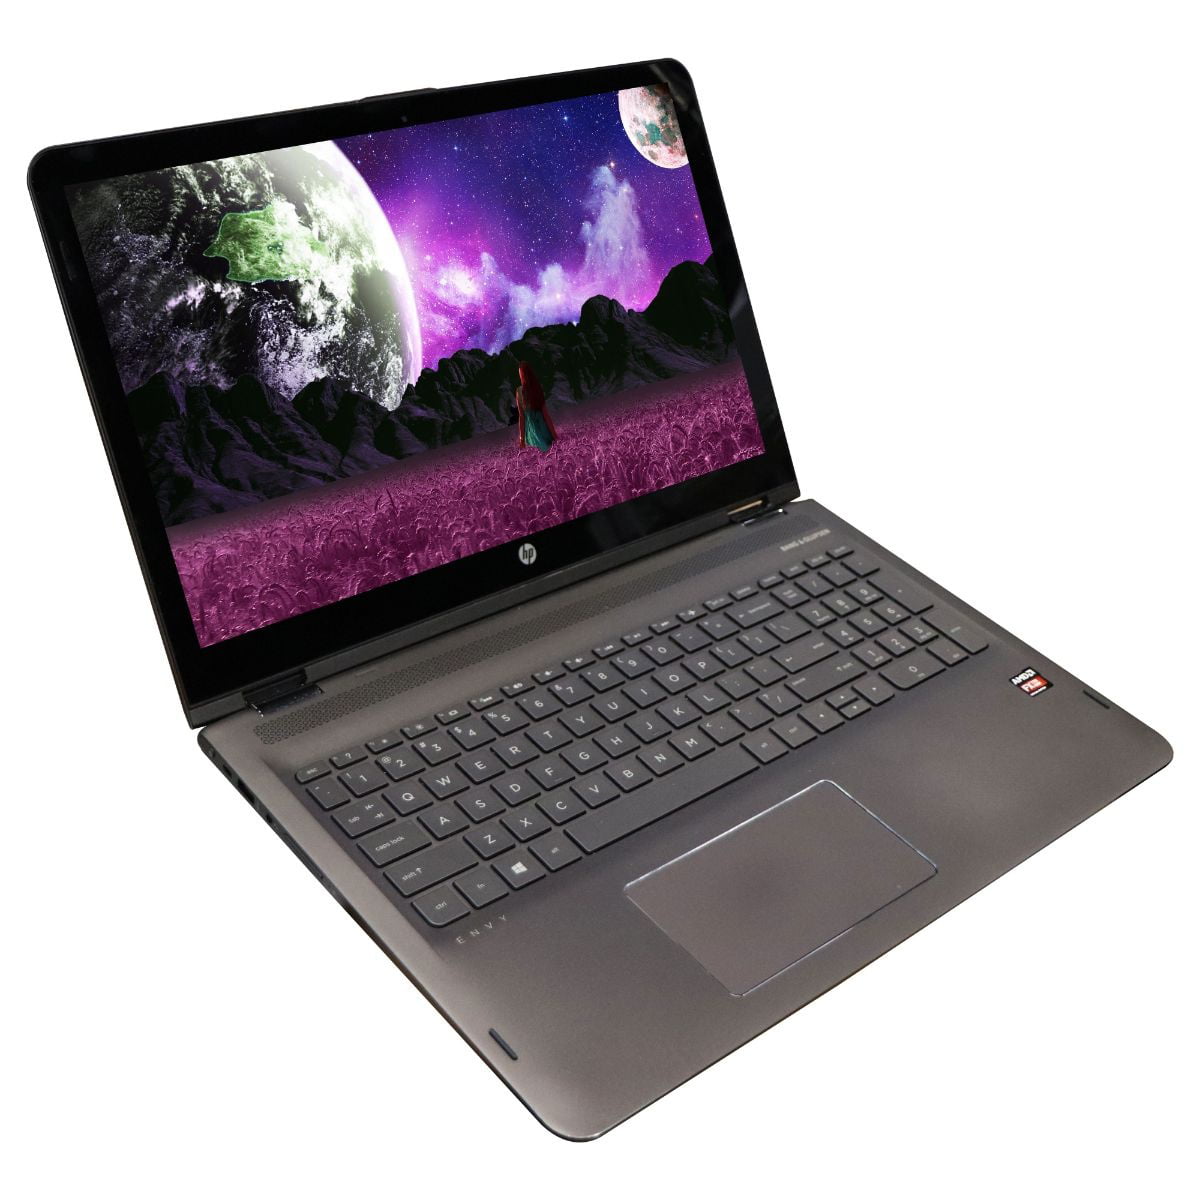 HP Envy x360 m6 Convertible 15.6in Touchscreen PC Laptop M6-ar004dx FX